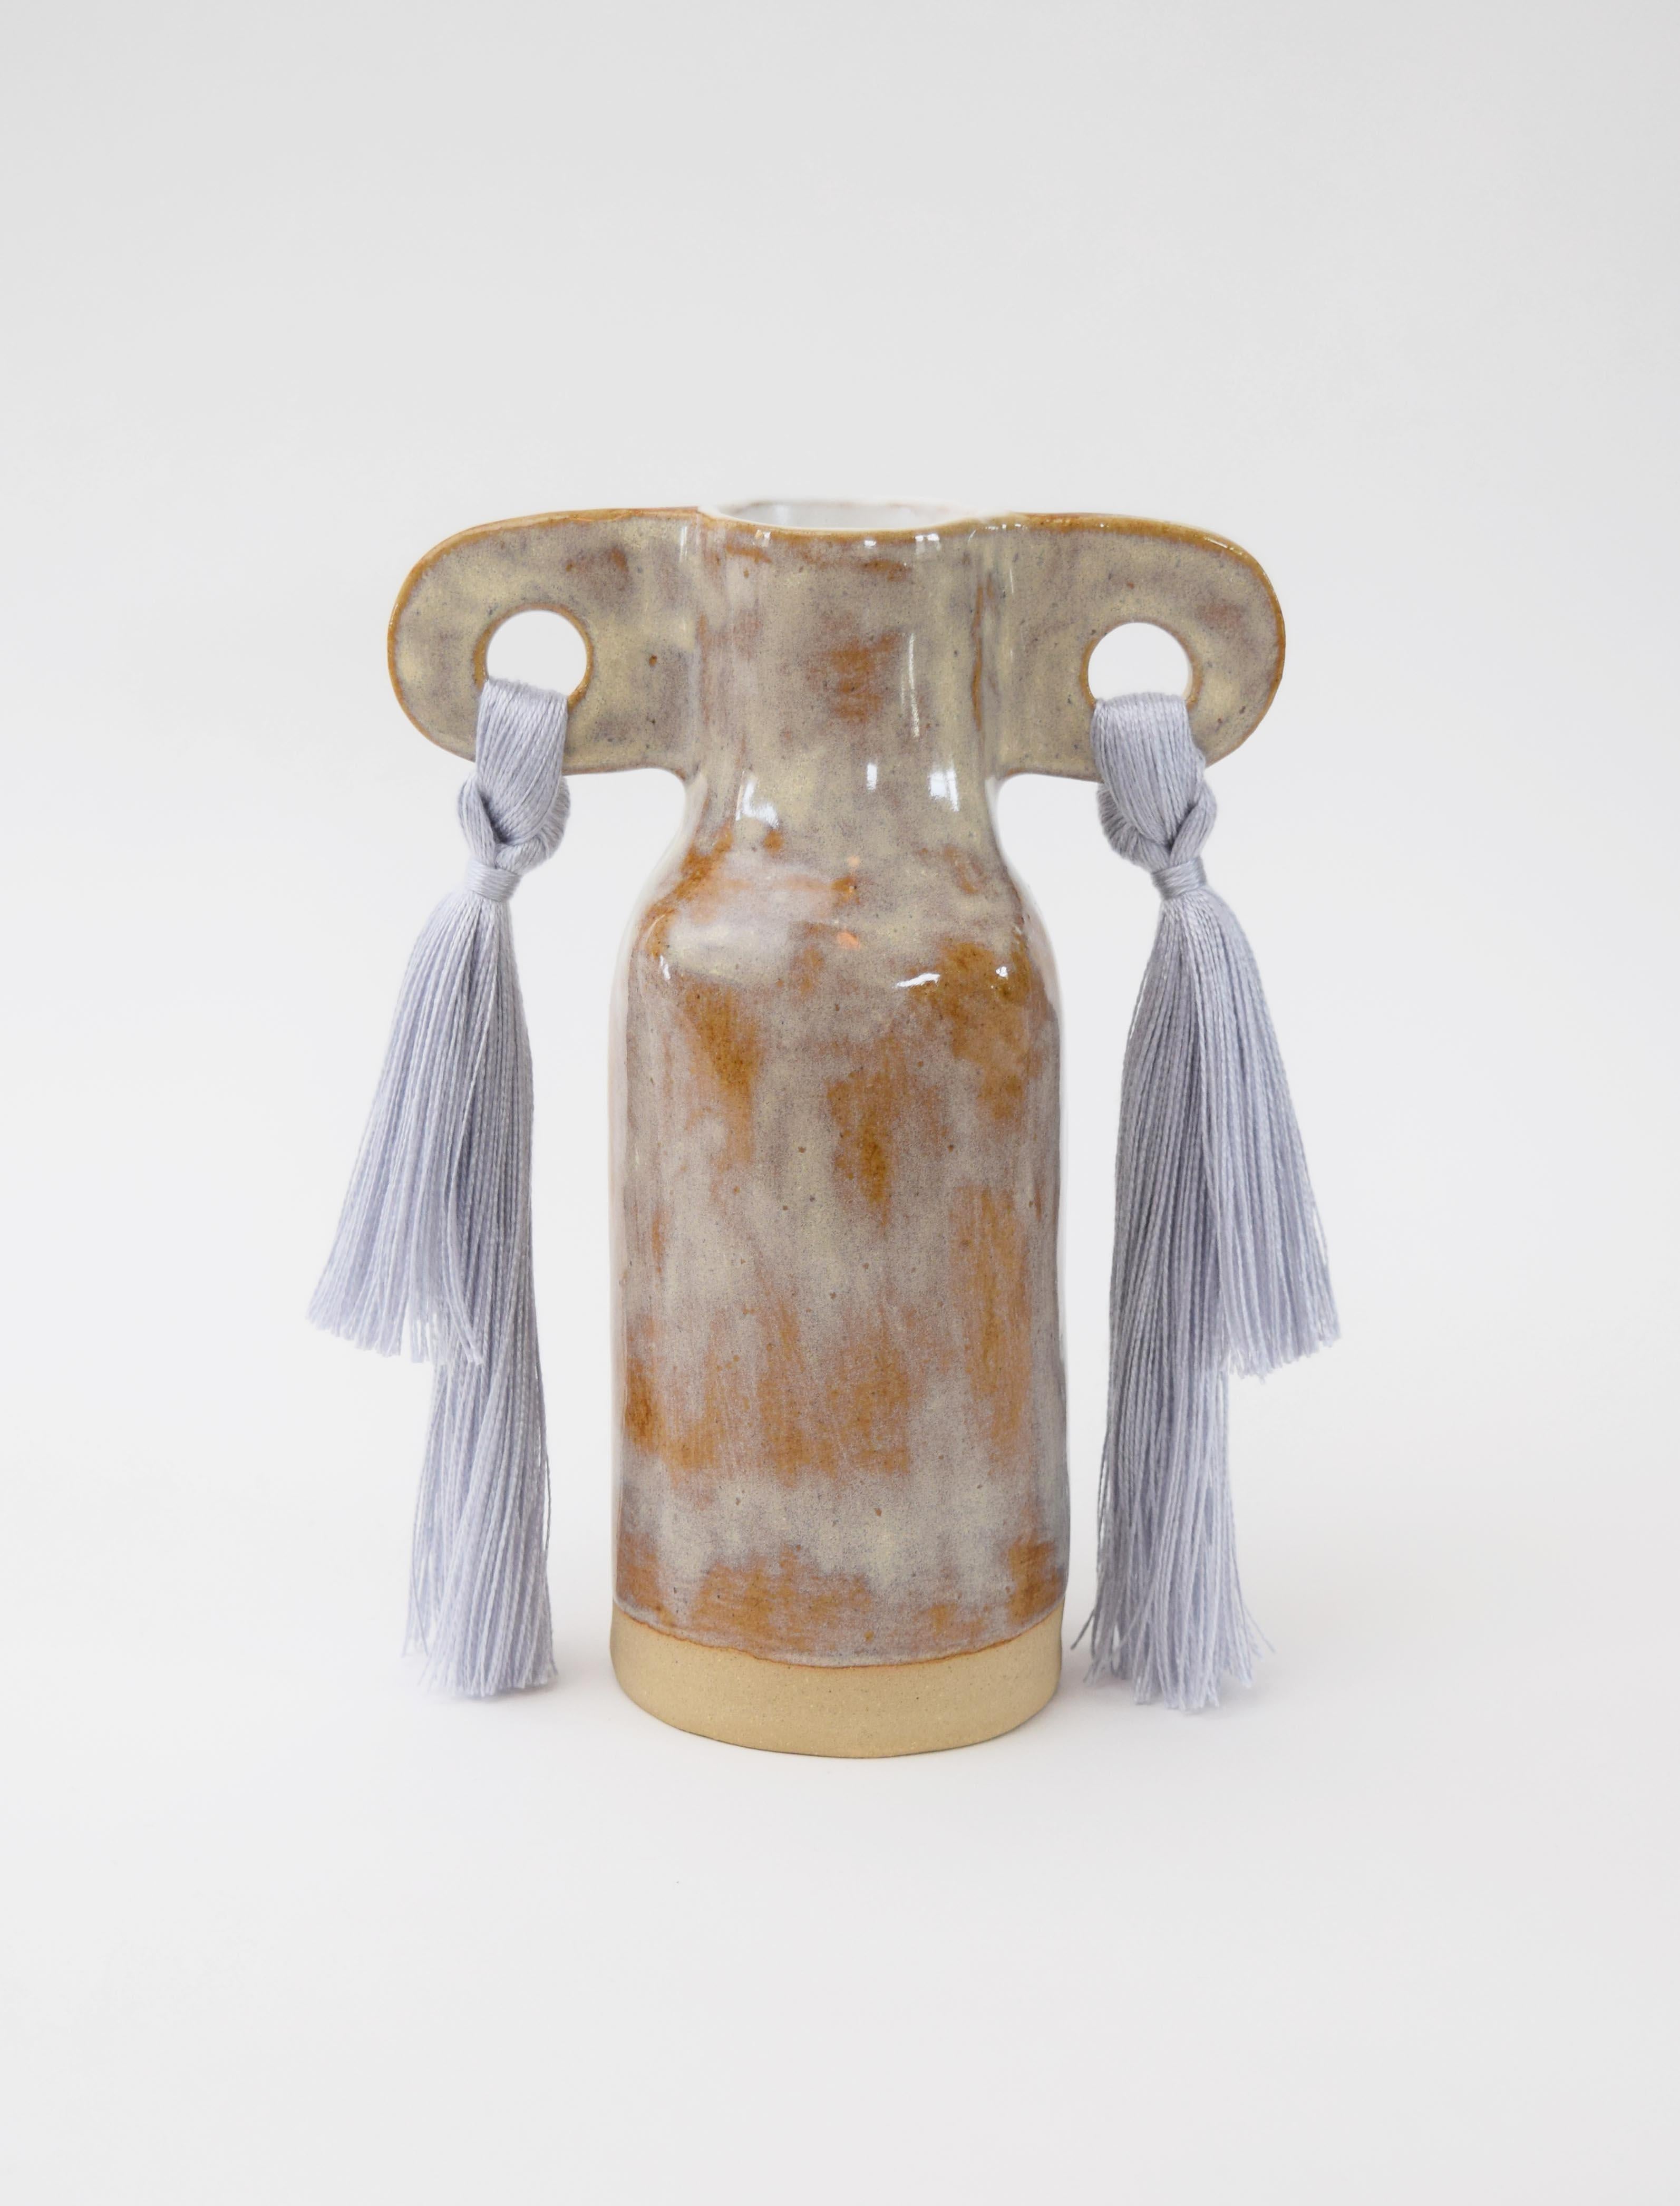 American Handmade Ceramic Vase #606 in Gray Glaze with Tencel Fringe Details For Sale